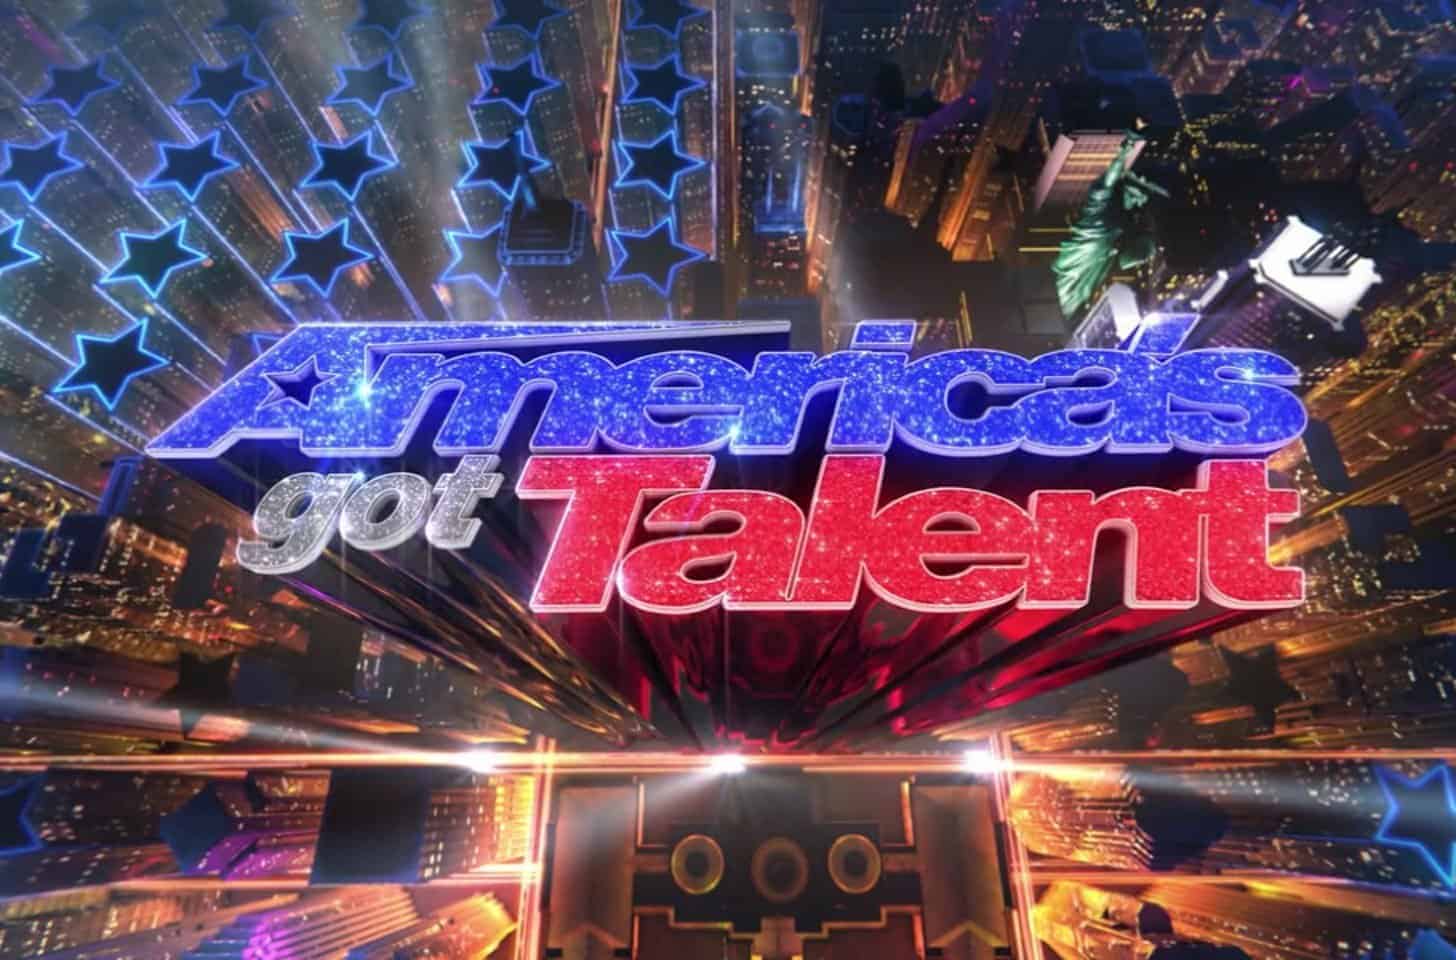 A Guide to “America’s Got Talent” in 2021